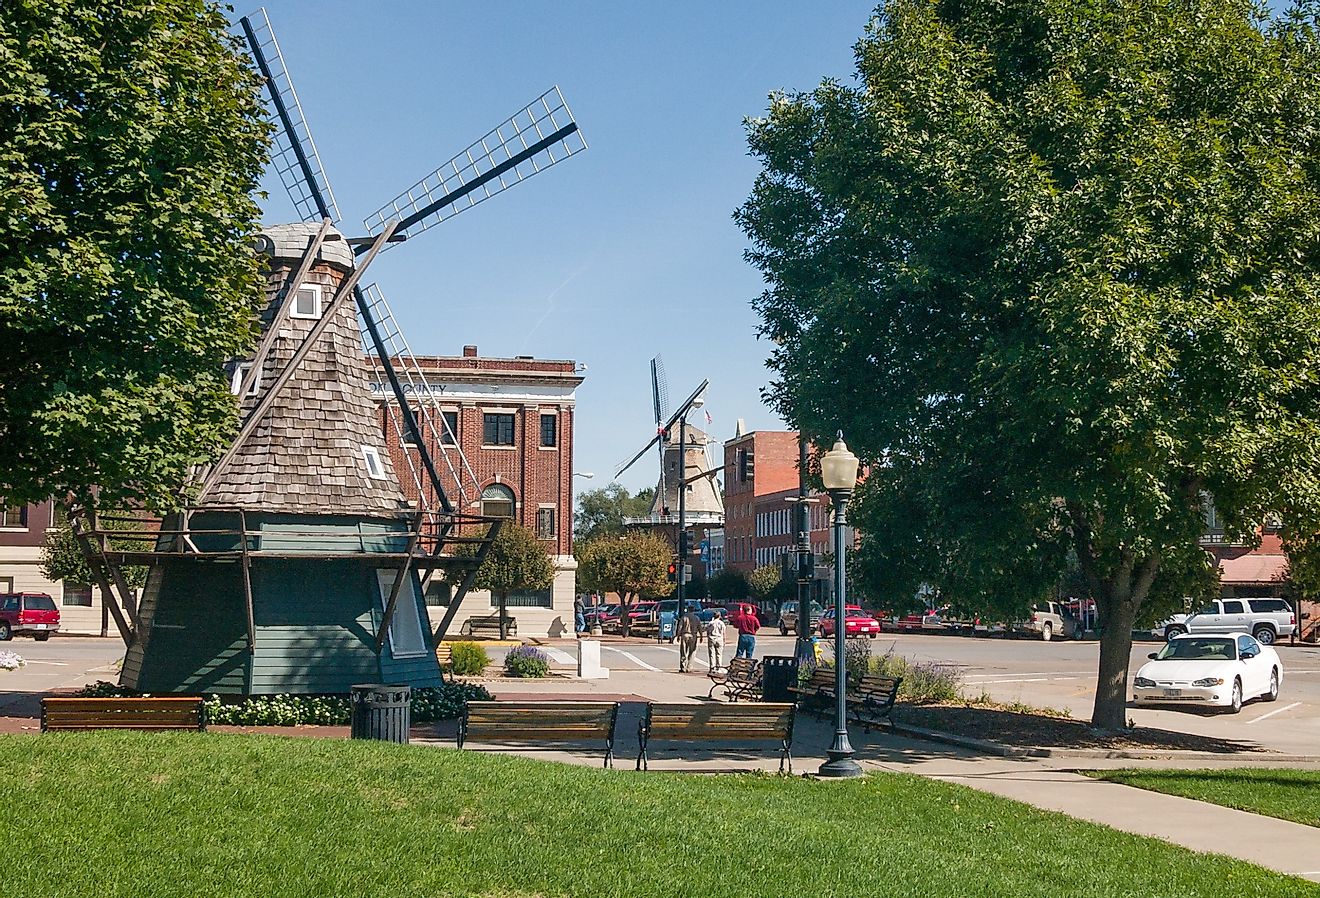 Dutch village and downtown streets in Pella, Iowa.